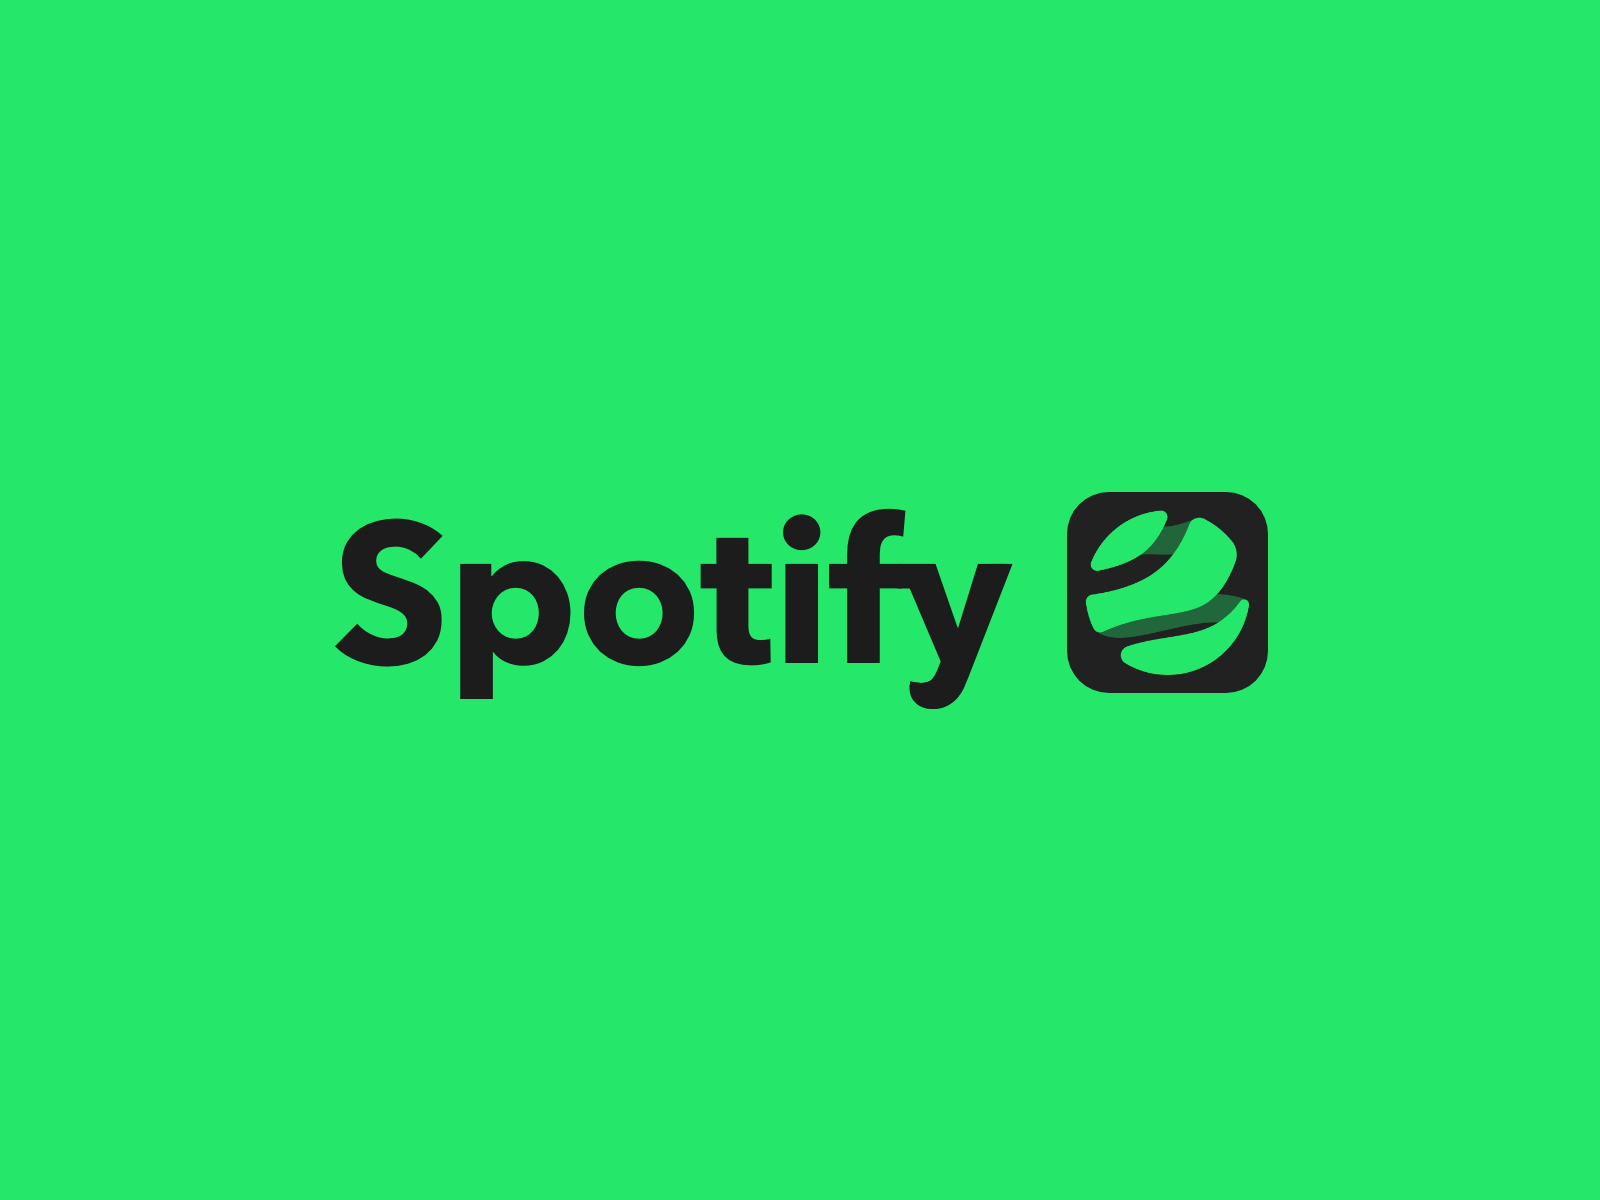 SPOTIFY LOGO DESIGN, Custom Professional Spotify Logo Design